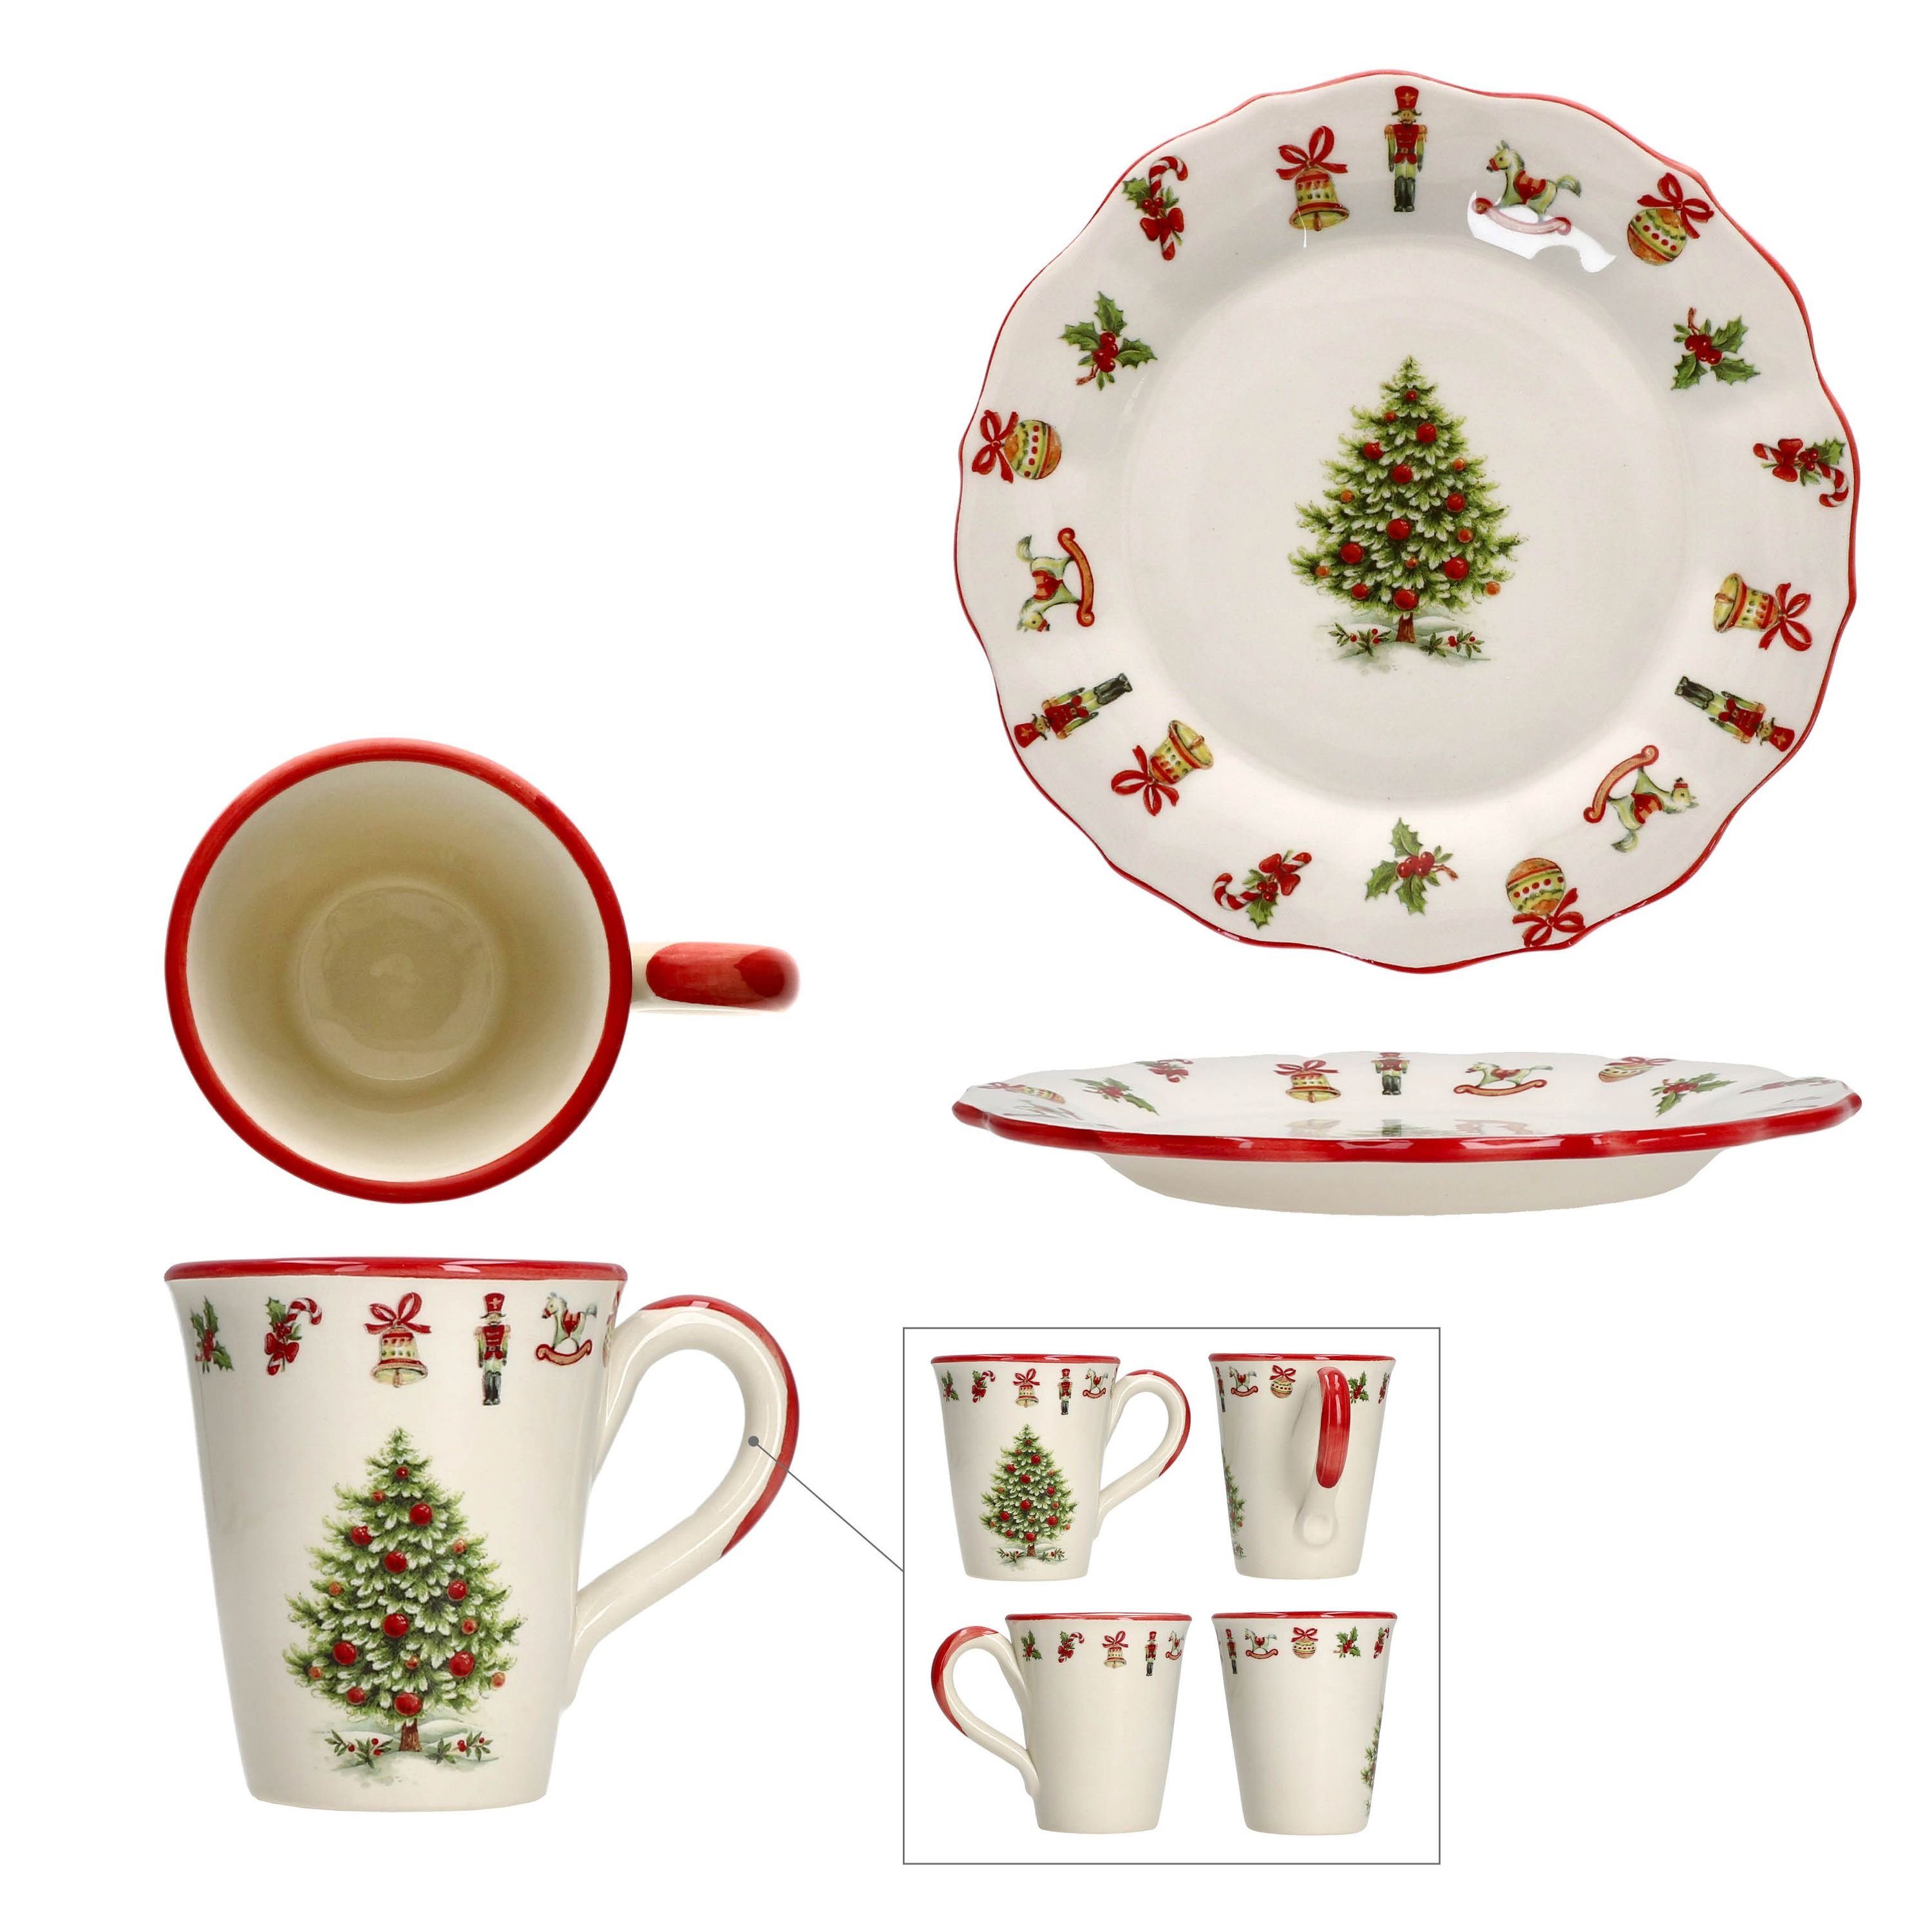 Keramik Frühstücks-Geschirrset Pers Frühstücksset Teller Keramik 4tlg 2 Weihnachten, Maestro MamboCat Natale